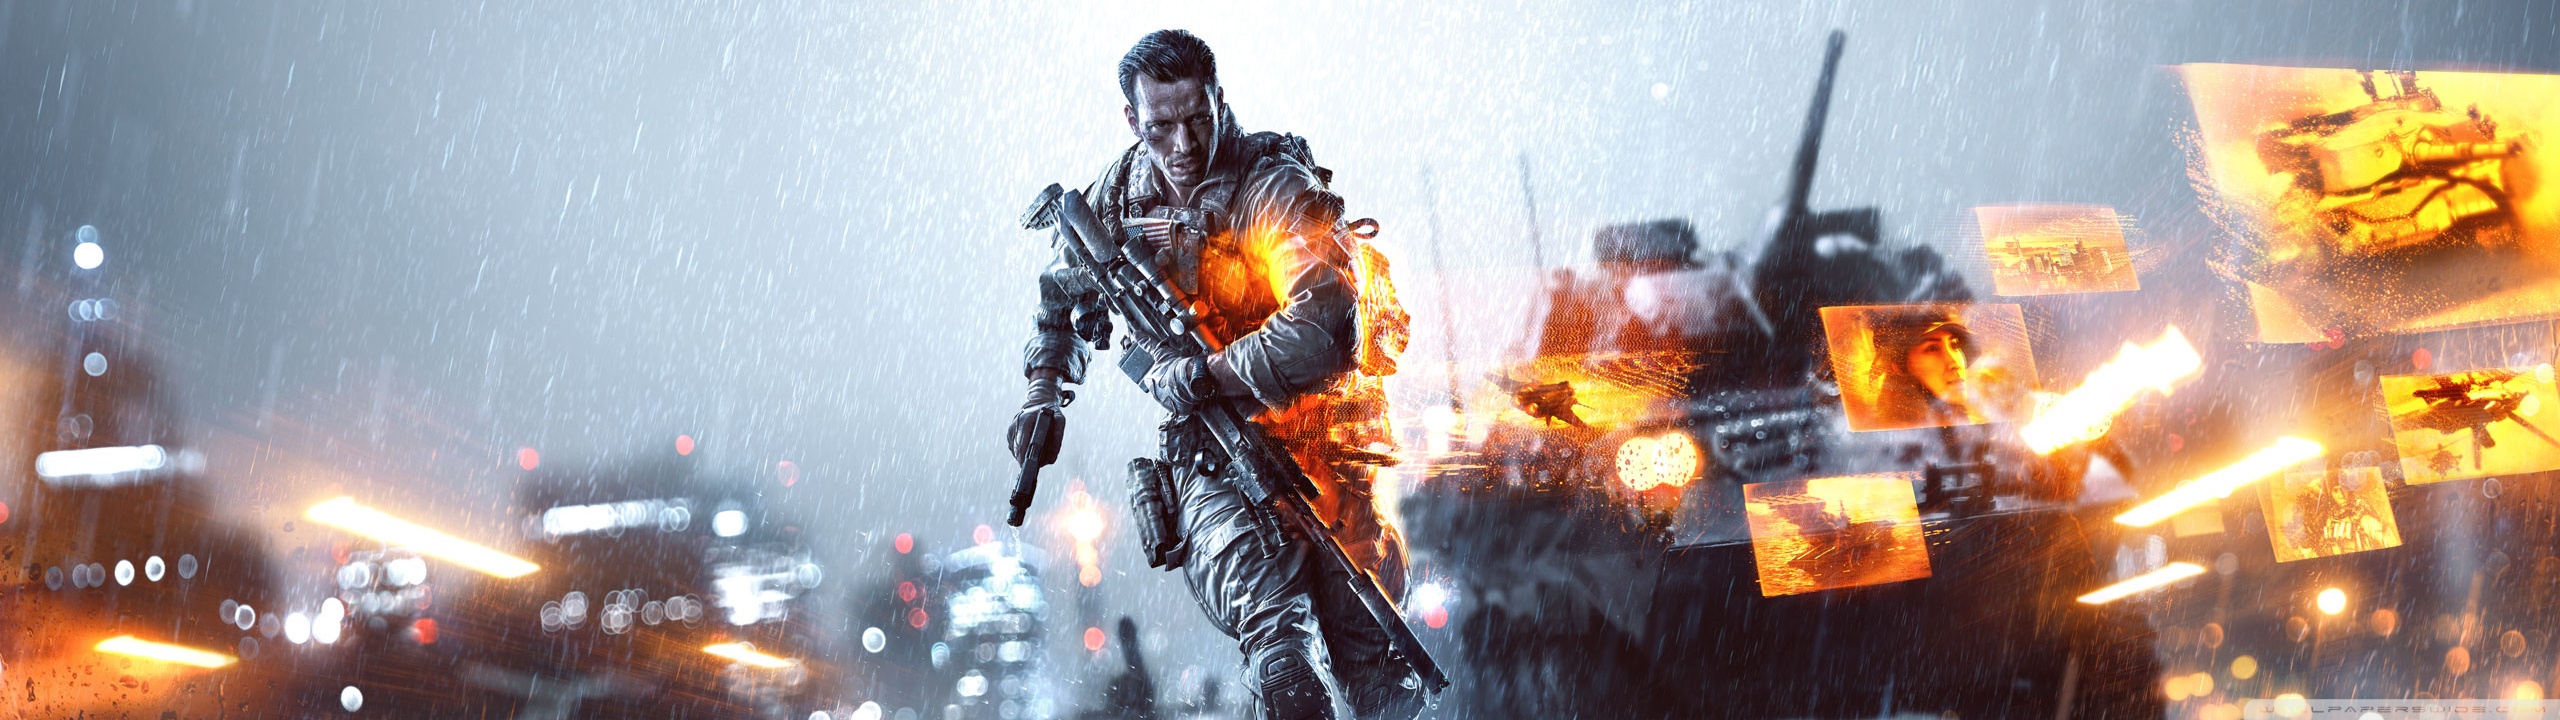 200+] Battlefield 4 Backgrounds